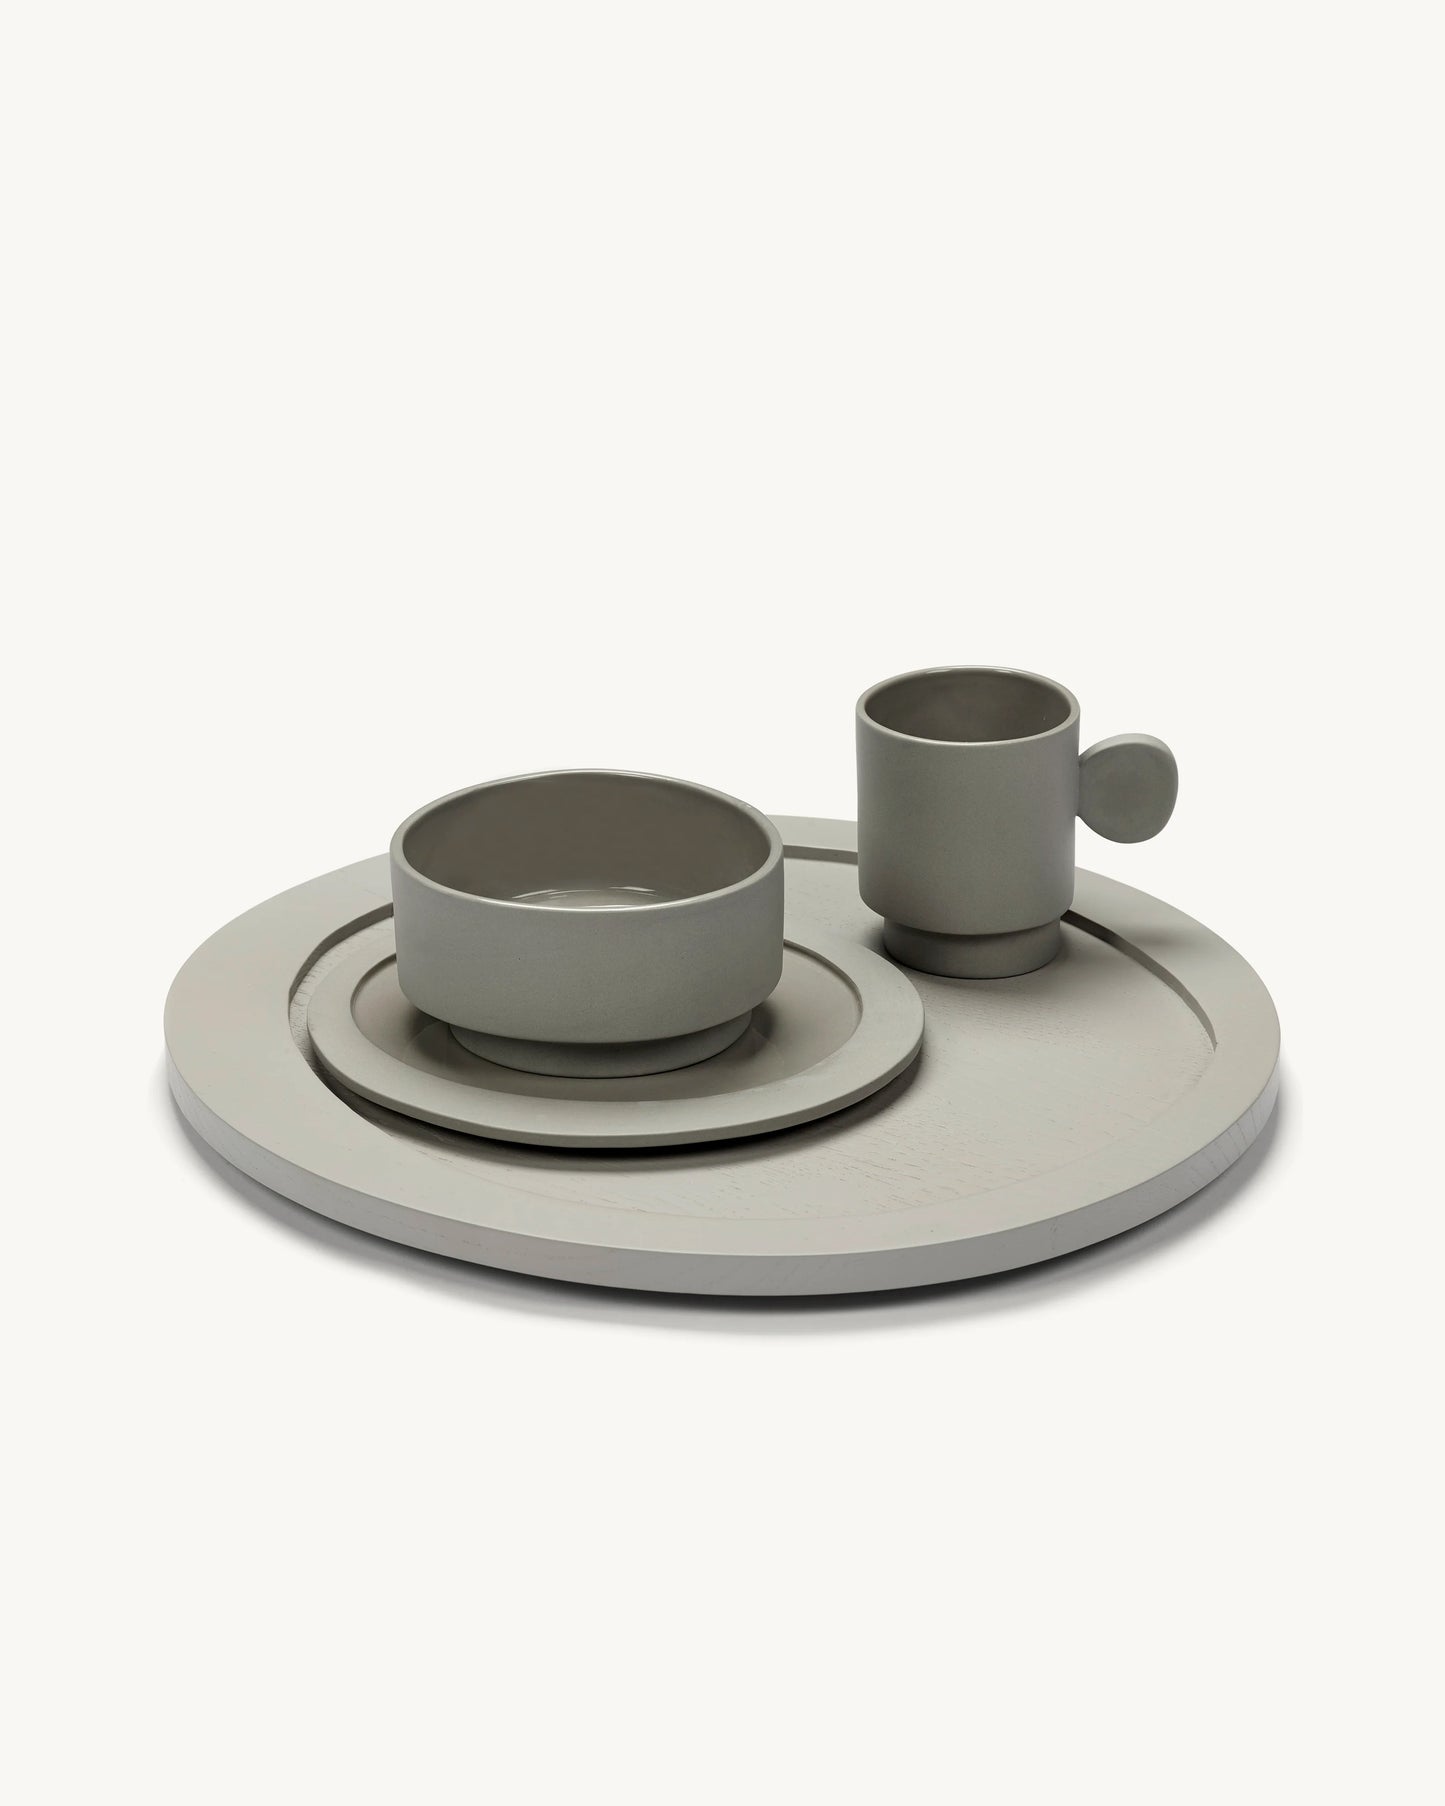 Valerie Objects Inner Circle Bowl, light grey by Maarten Baas - $34.00